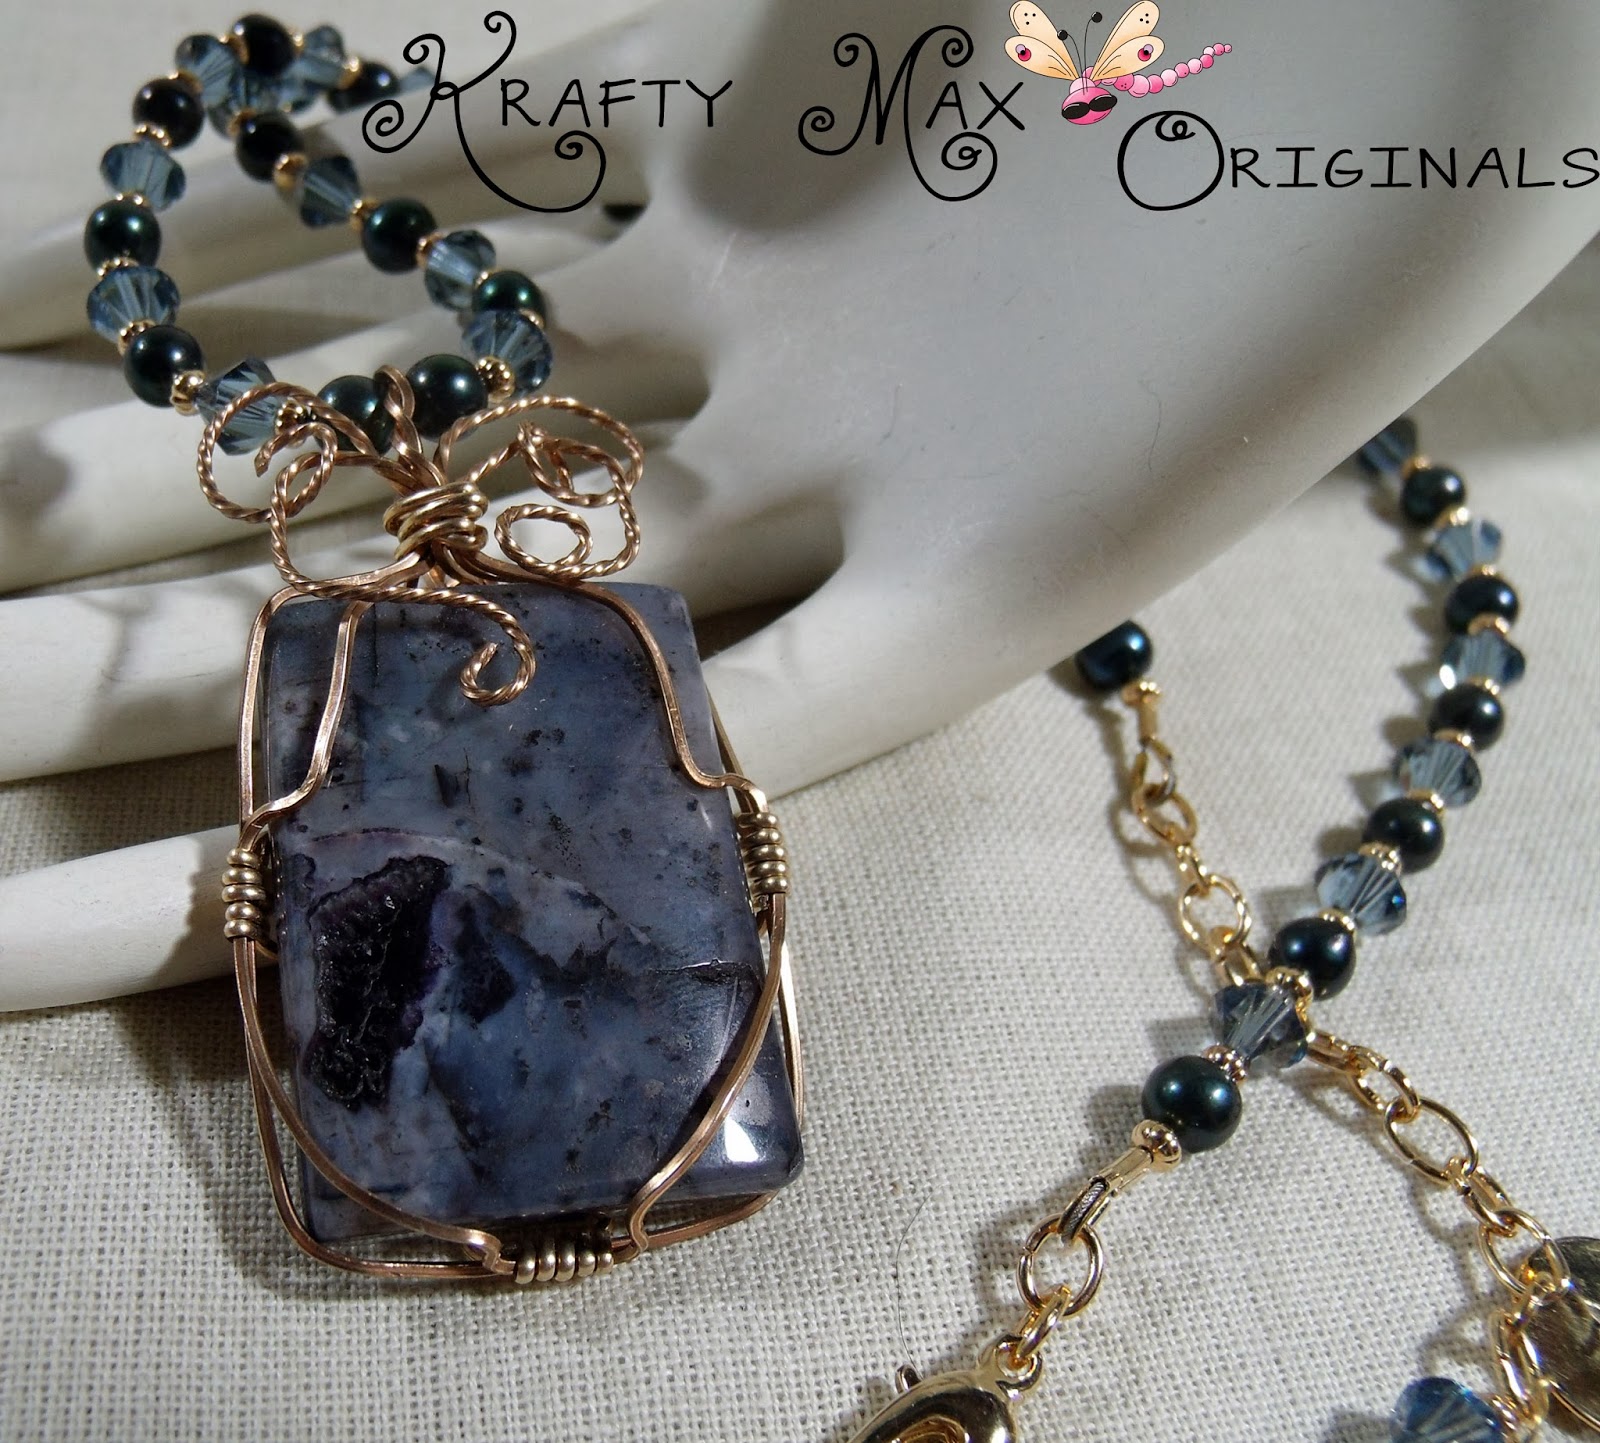 http://www.artfire.com/ext/shop/product_view/KraftyMax/8442337/swarovski_crystals_swarovski_pearls_and_blue_lapis_necklace_set/handmade/jewelry/sets/crystal